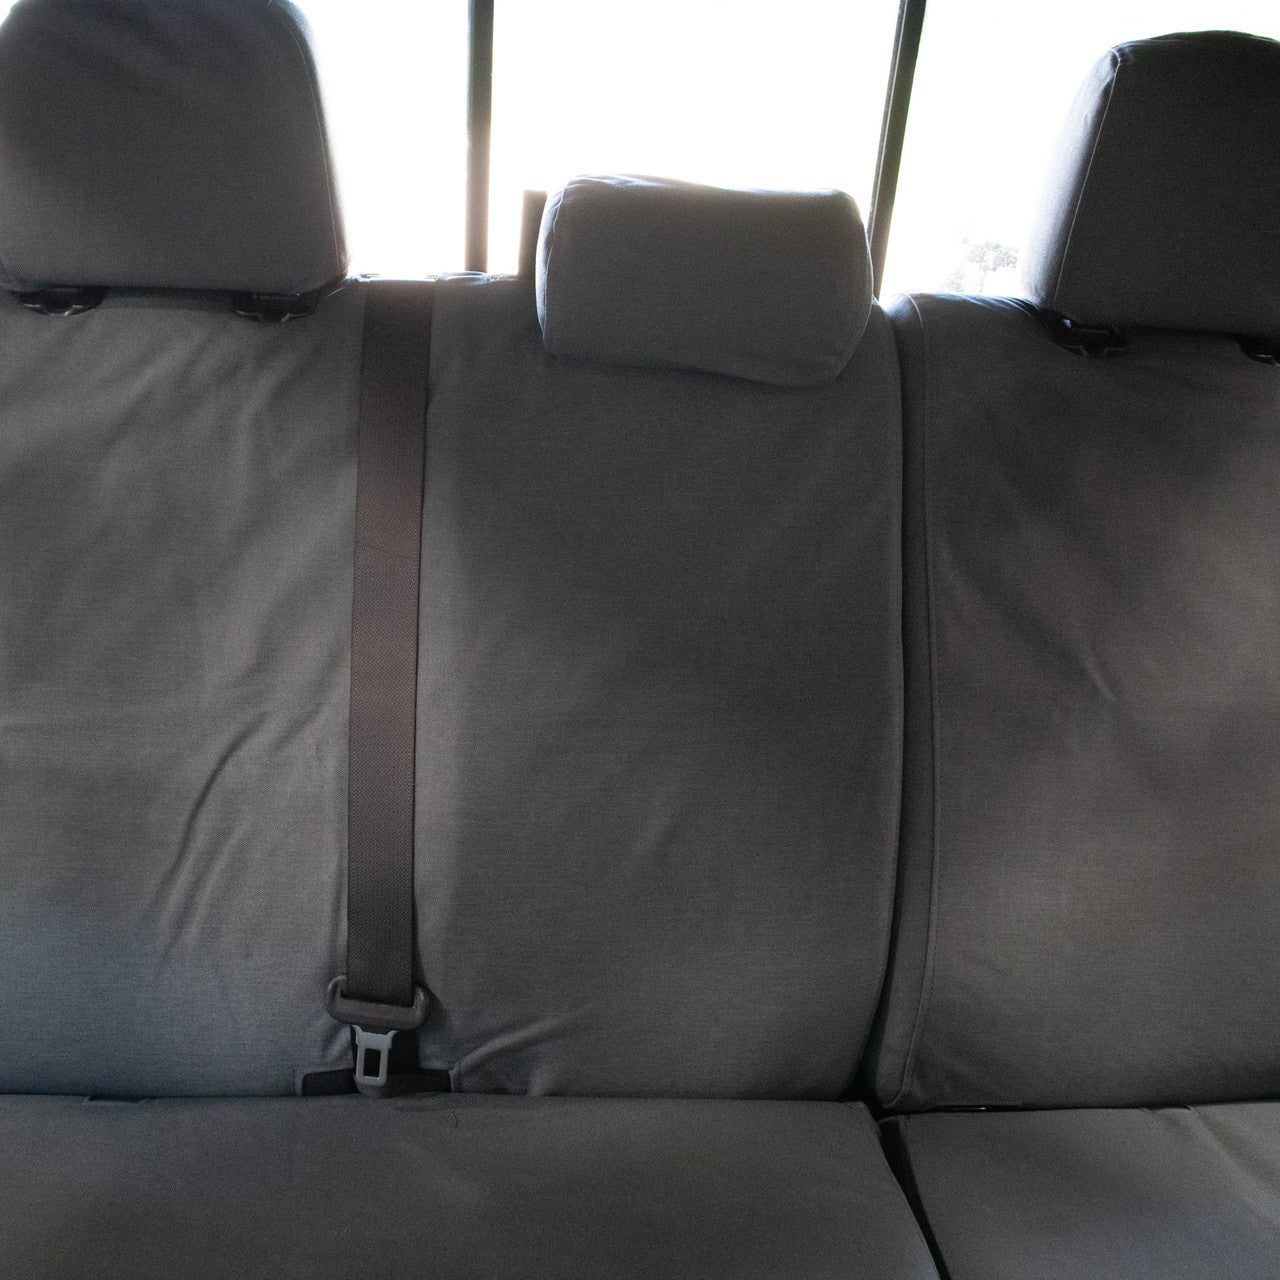 TigerTough Seat Covers Rear Seat Toyota Tacoma